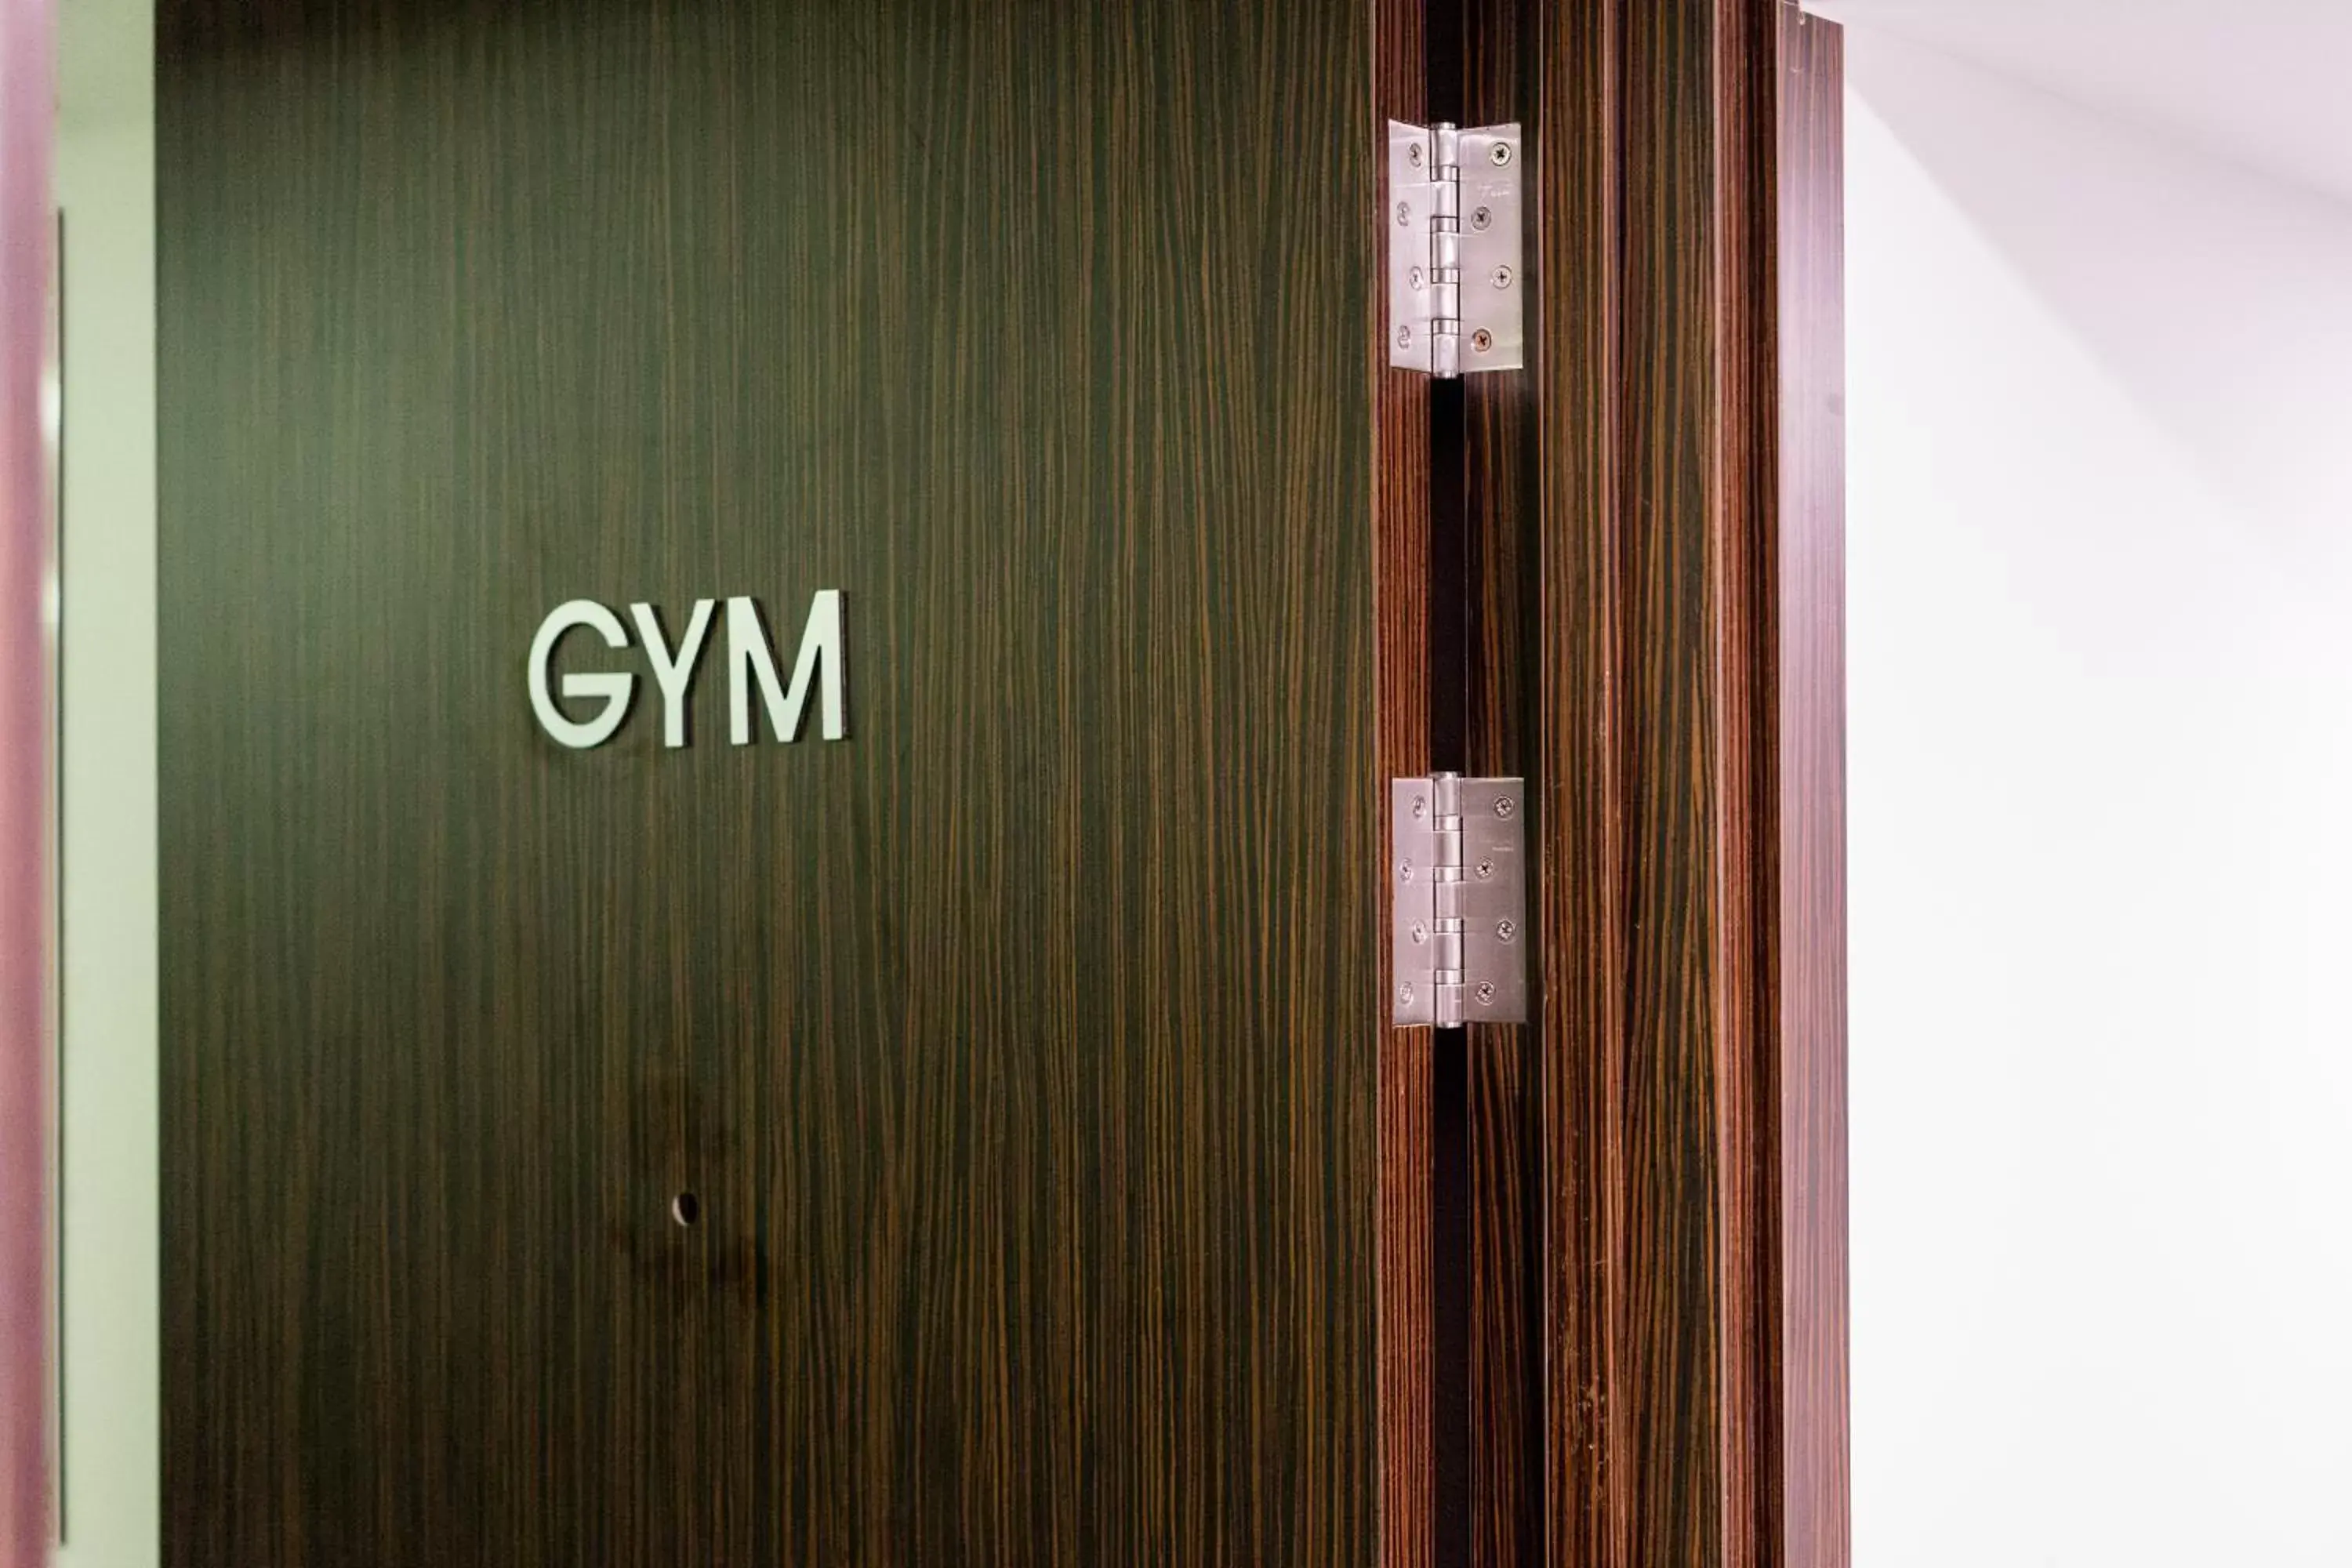 Fitness centre/facilities, Logo/Certificate/Sign/Award in An Vista Hotel